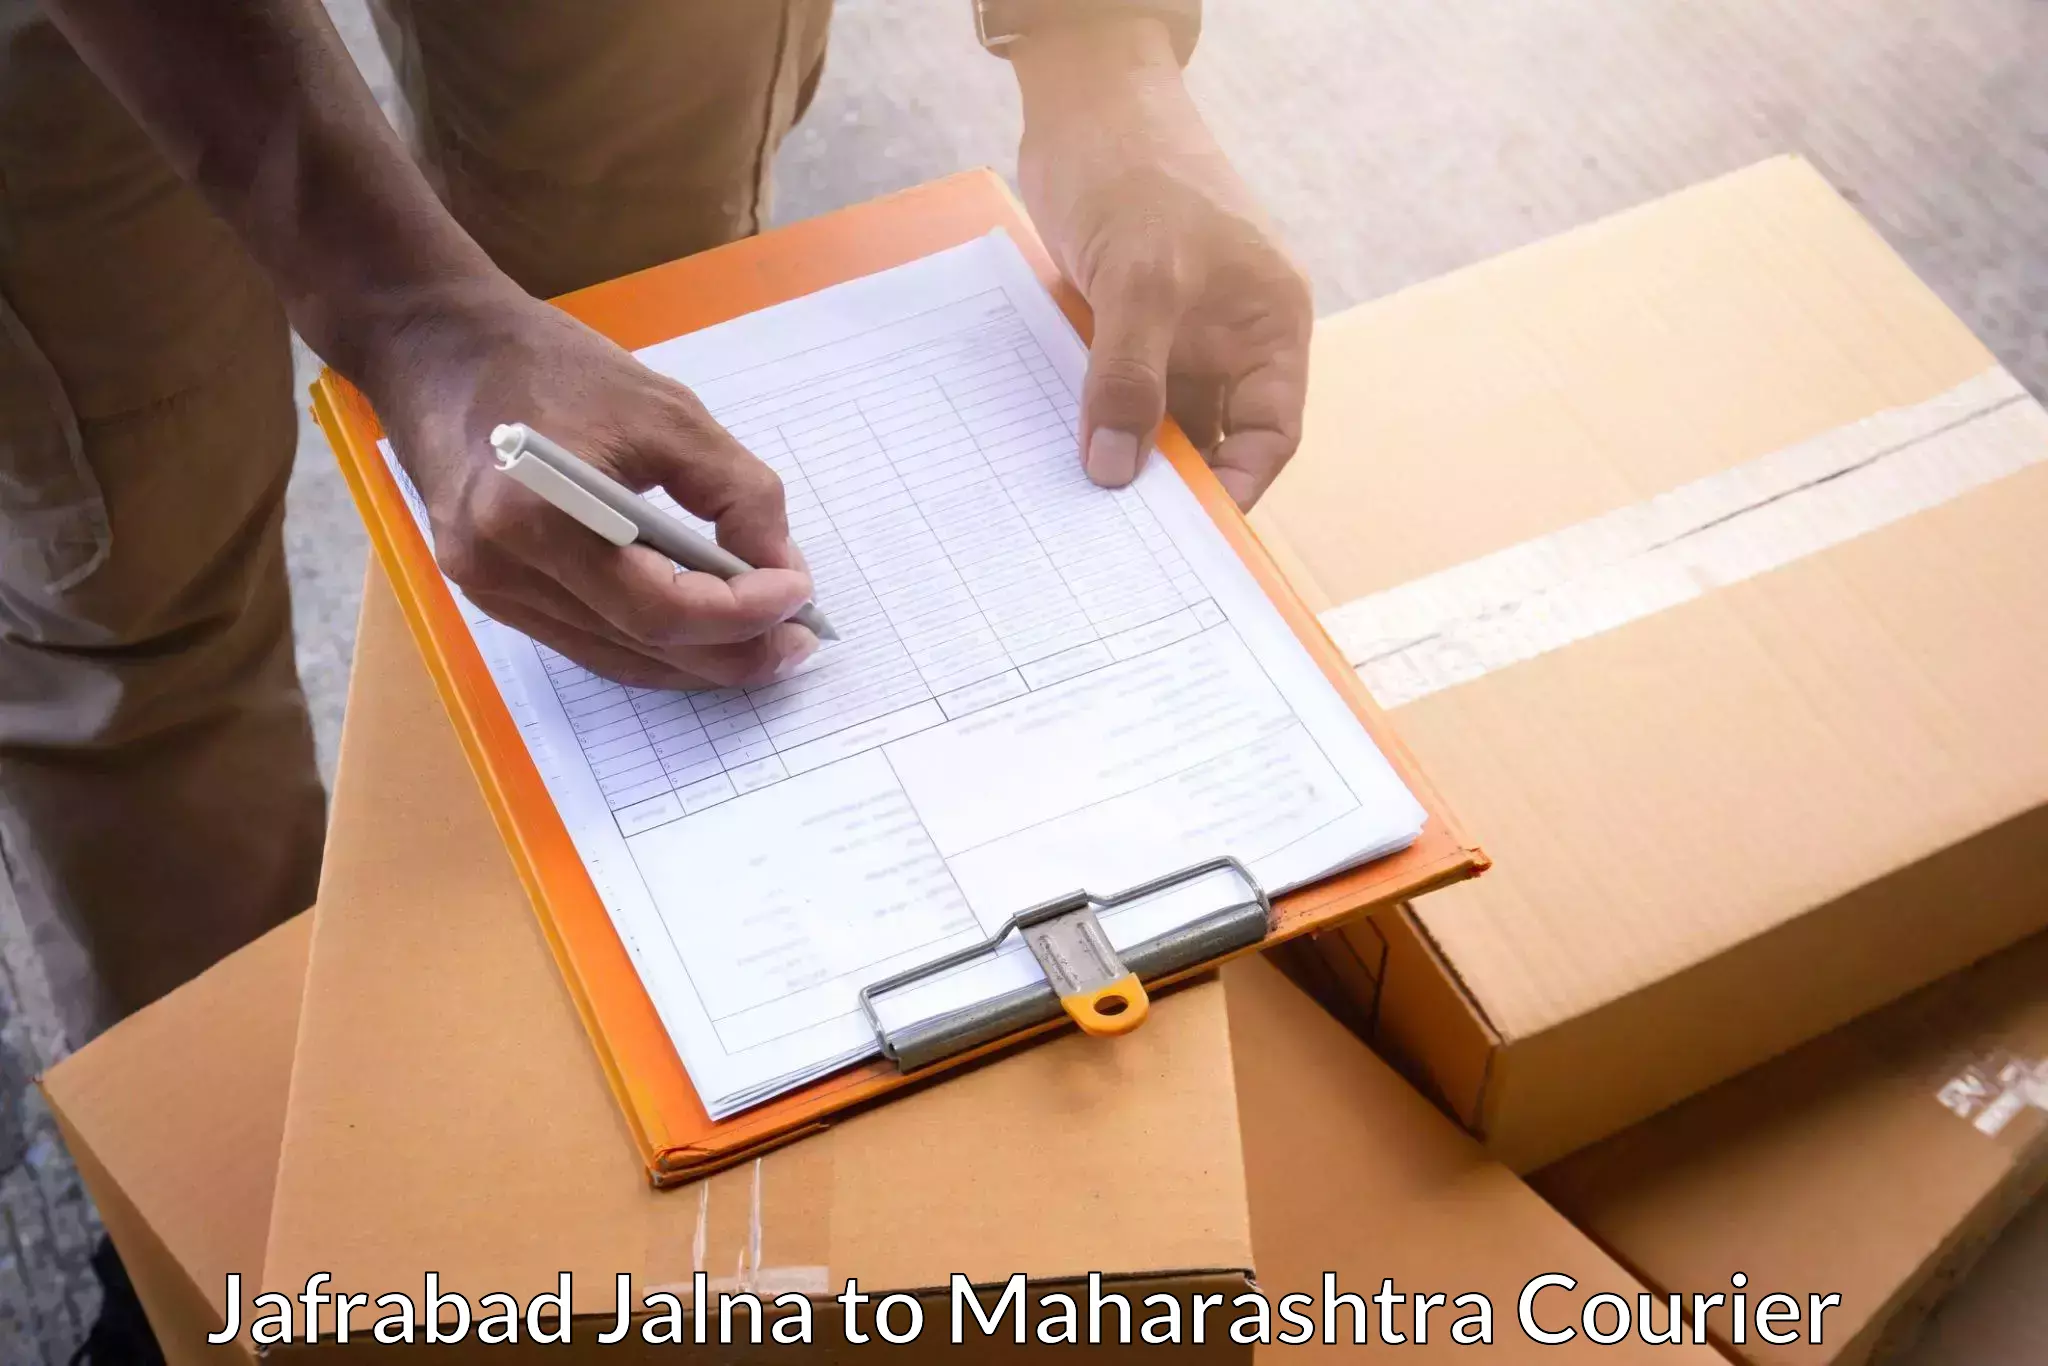 Urgent courier needs Jafrabad Jalna to Mudal